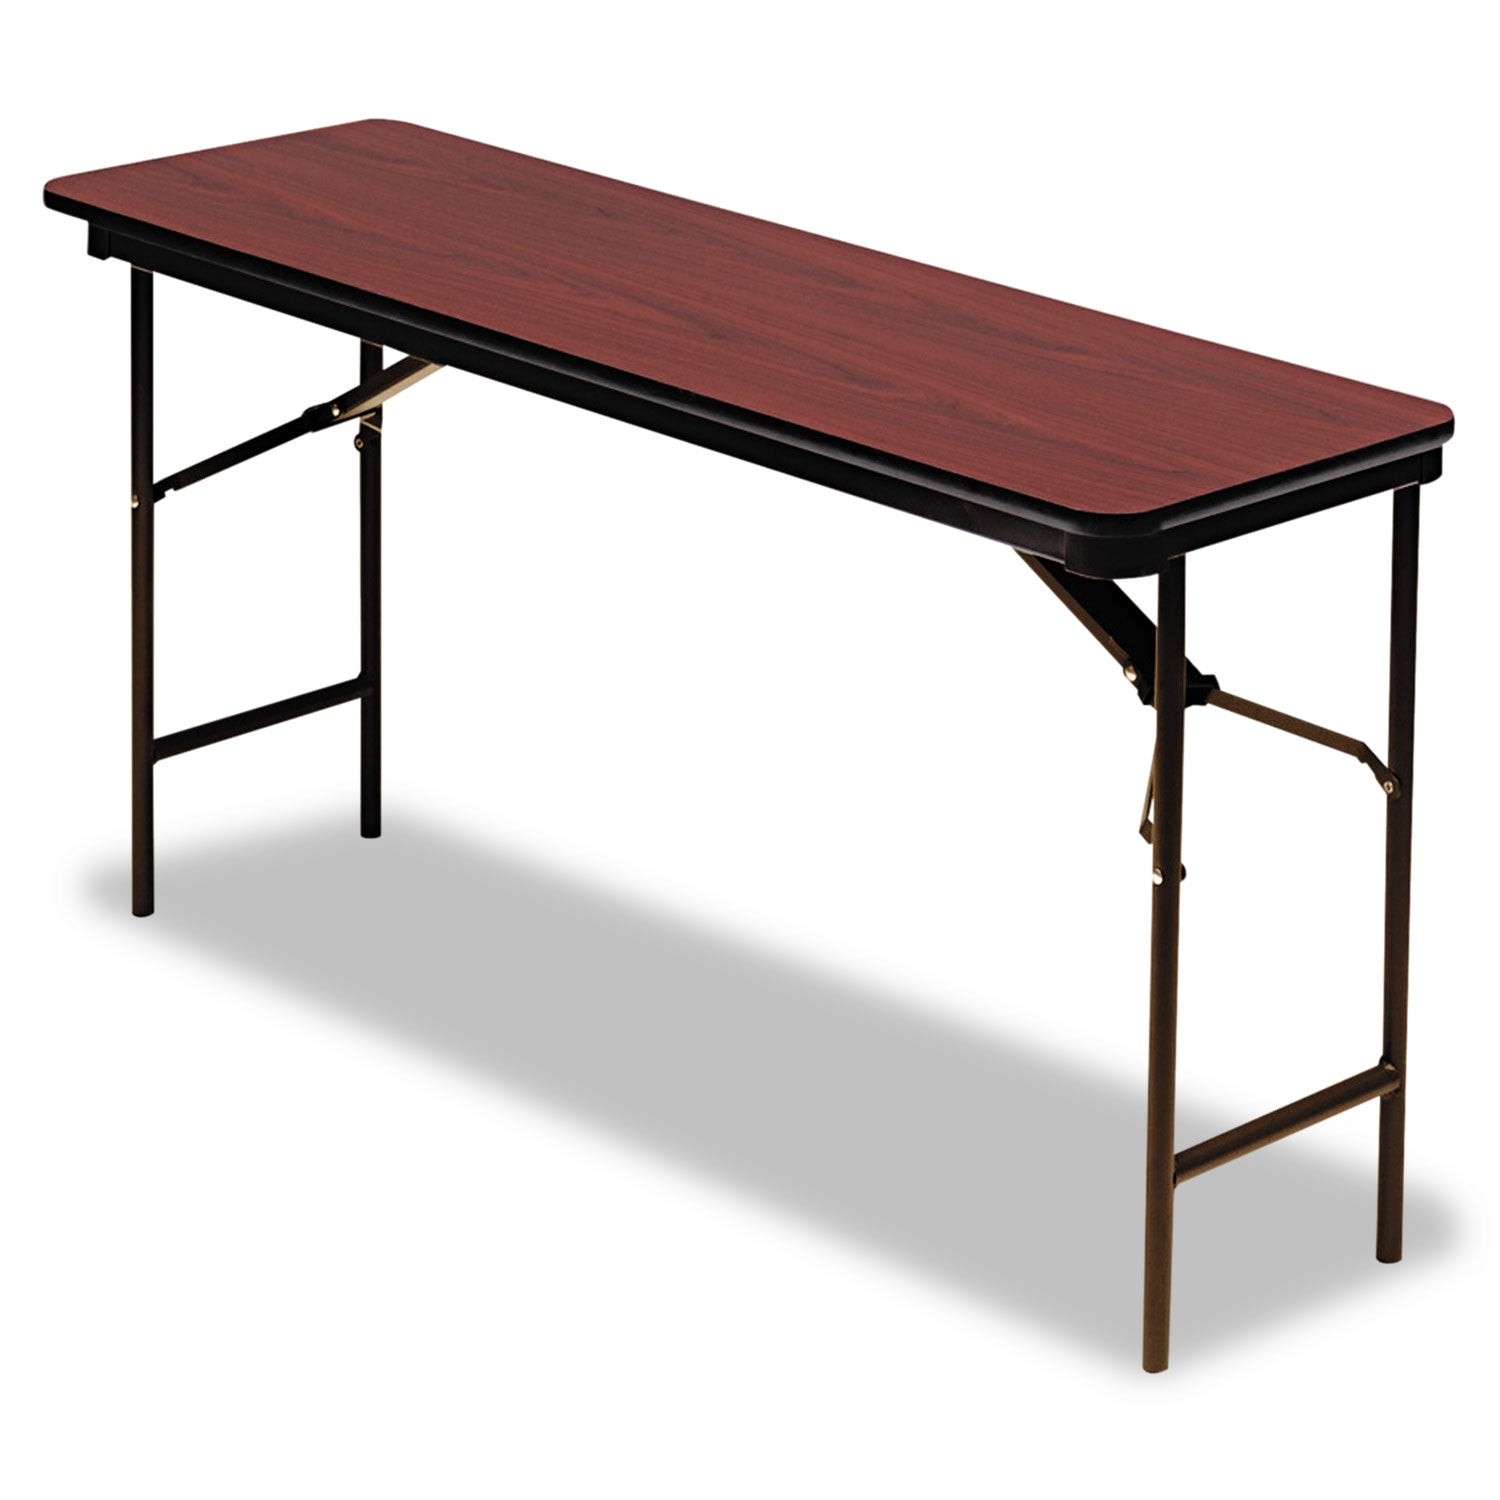 OfficeWorks Commercial Wood-Laminate Folding Table, Rectangular, 72" x 18" x 29", Mahogany - 